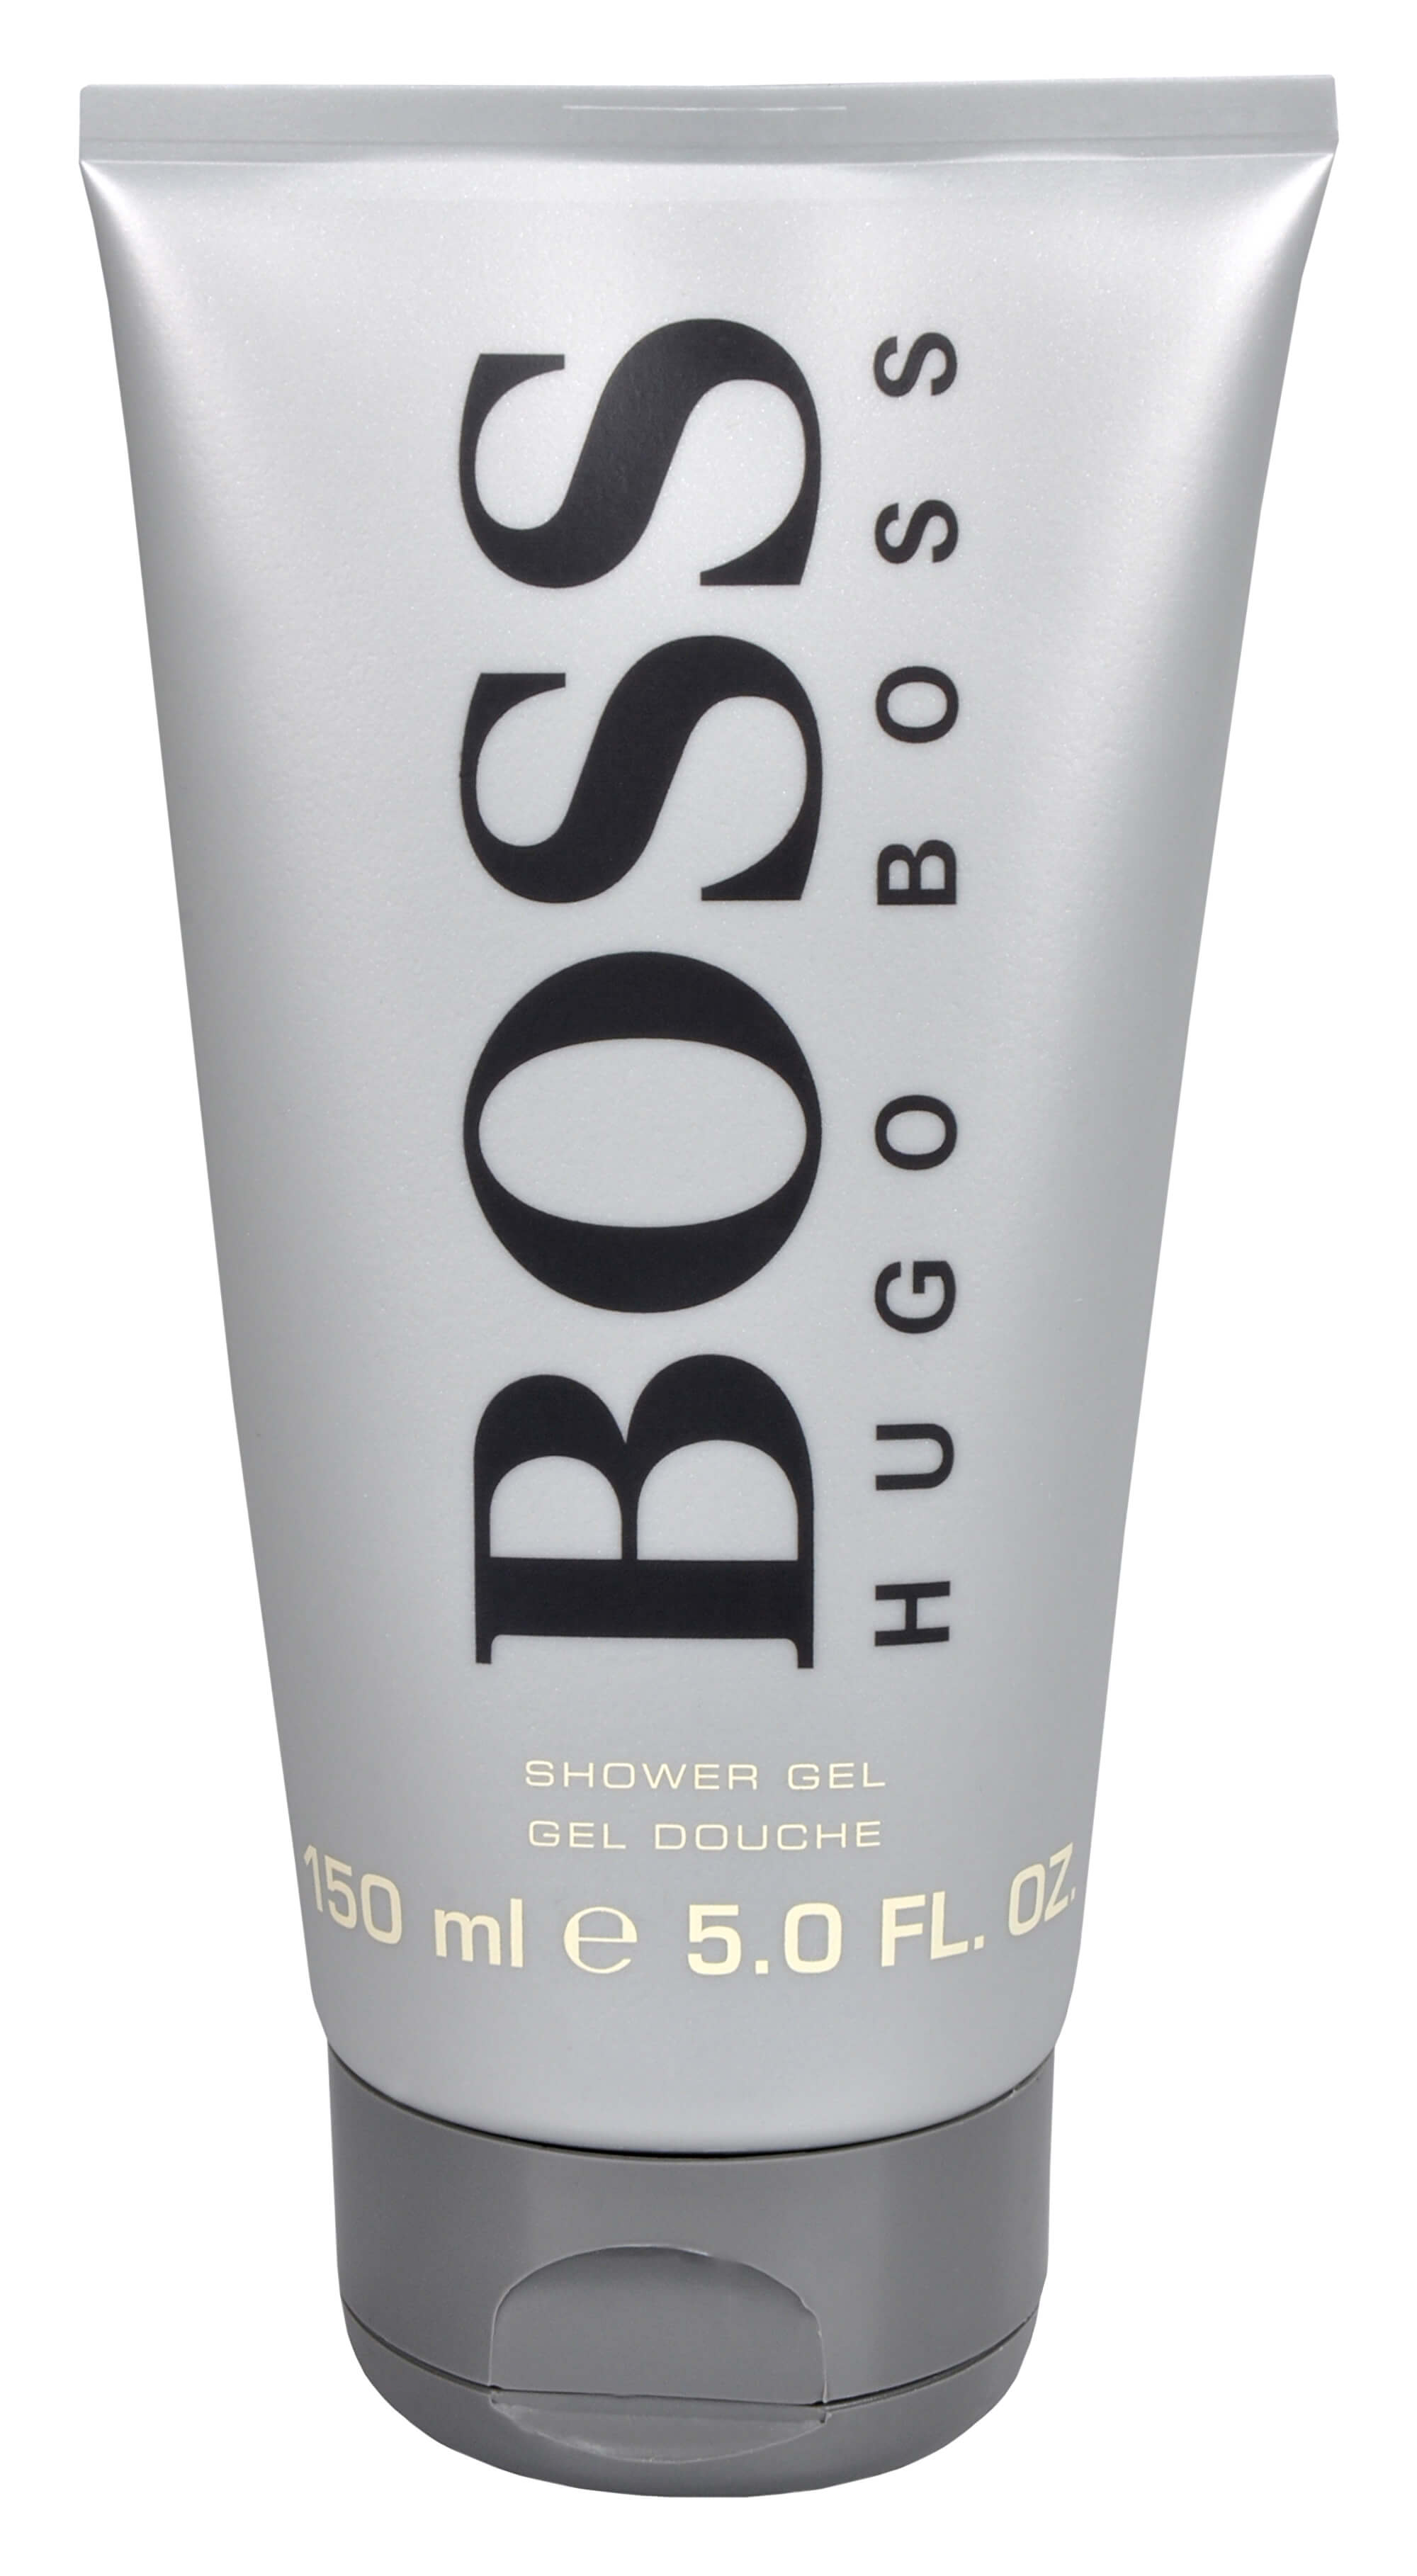 Hugo Boss Boss No. 6 Bottled - sprchový gel 150 ml